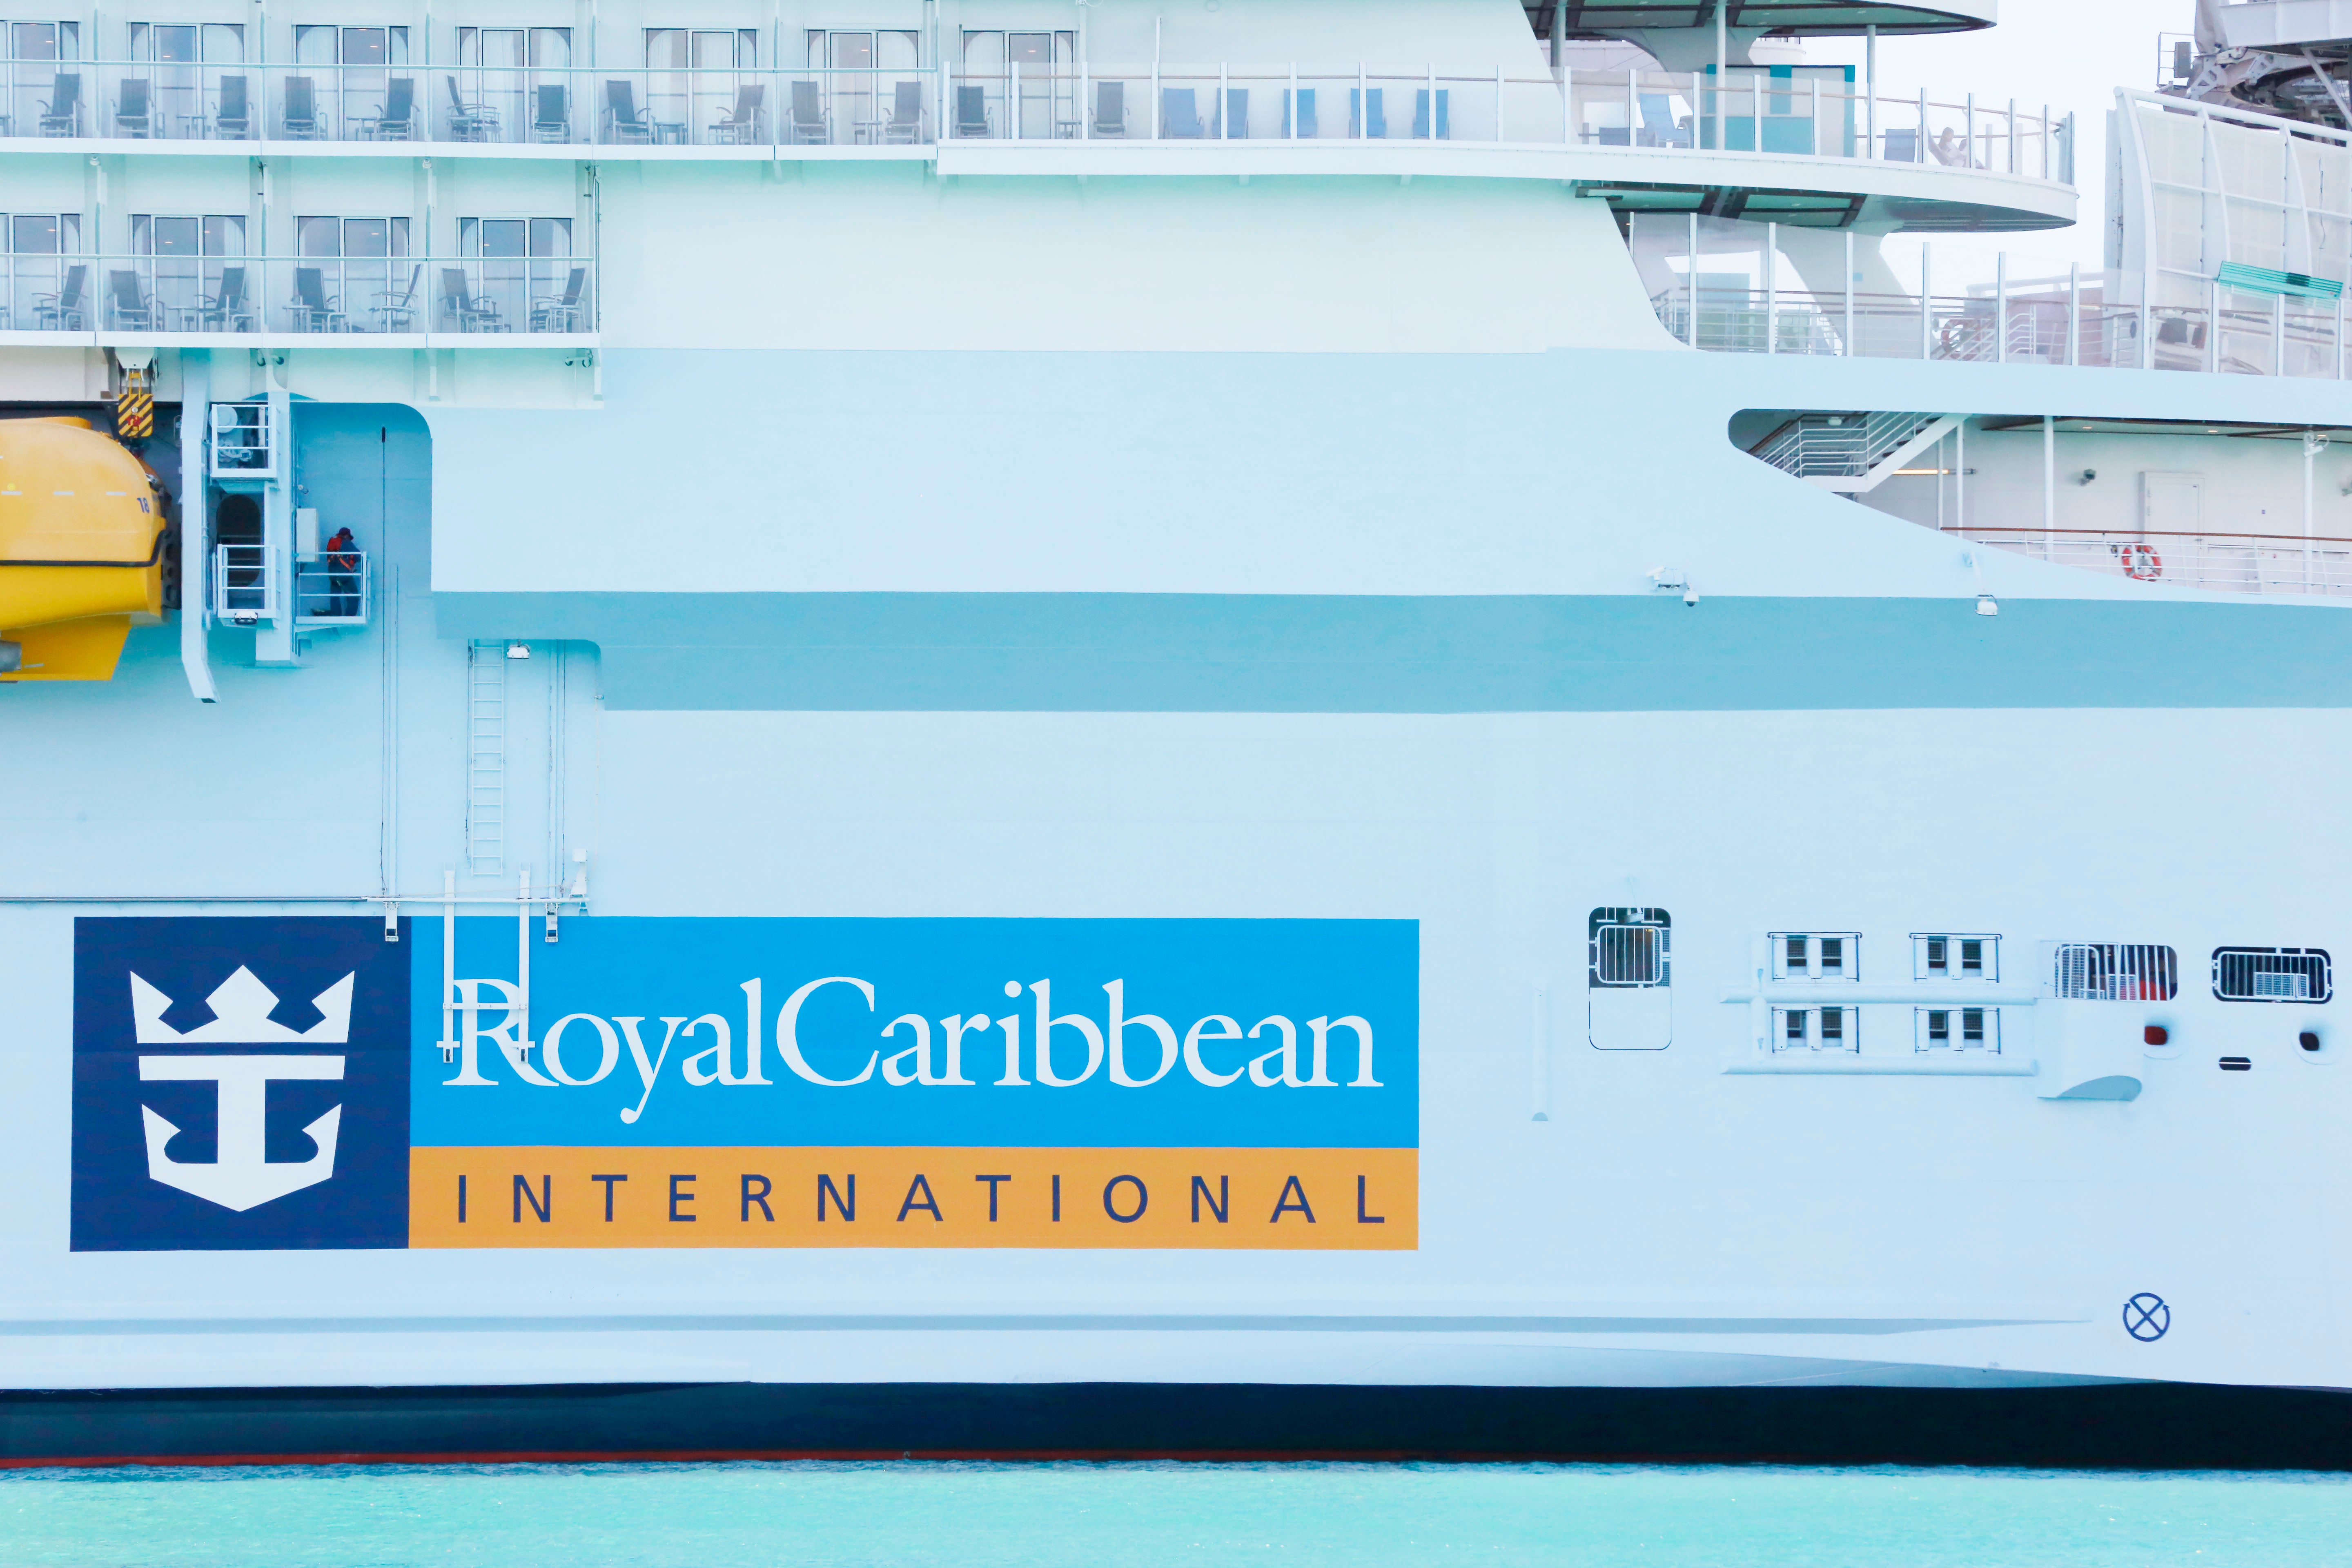 A Royal Caribbean ship docked at Miami, where the company’s headquarters are located